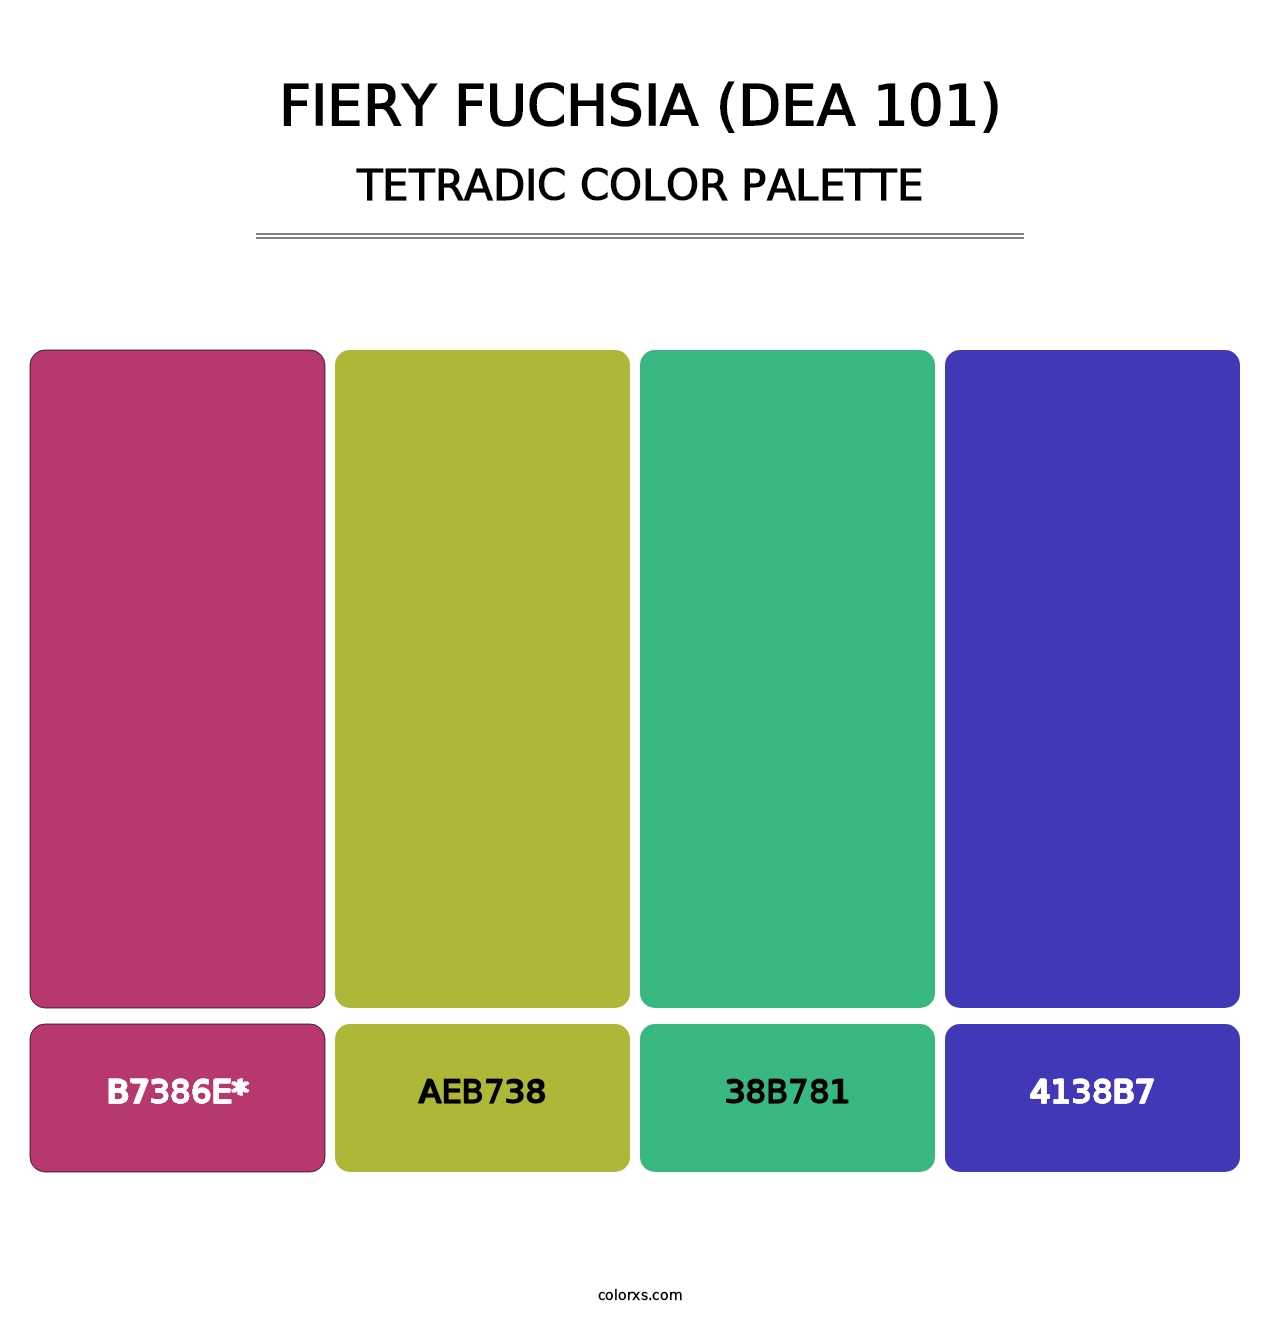 Fiery Fuchsia (DEA 101) - Tetradic Color Palette